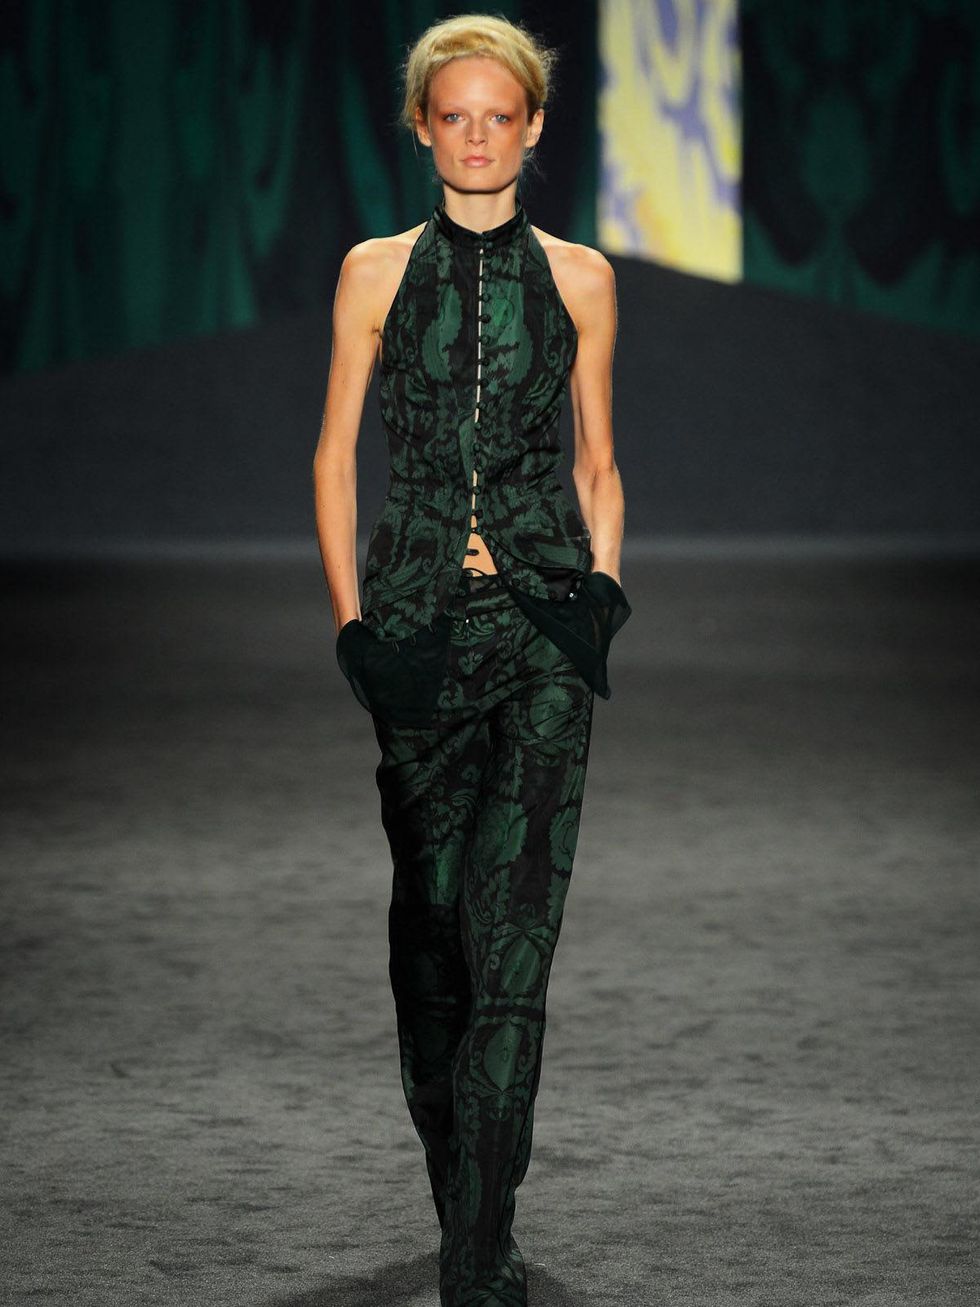 Clifford, Fashion Week spring 2013, Tuesday, Sept. 11, 2012, Vera Wang, green-black pantsuit